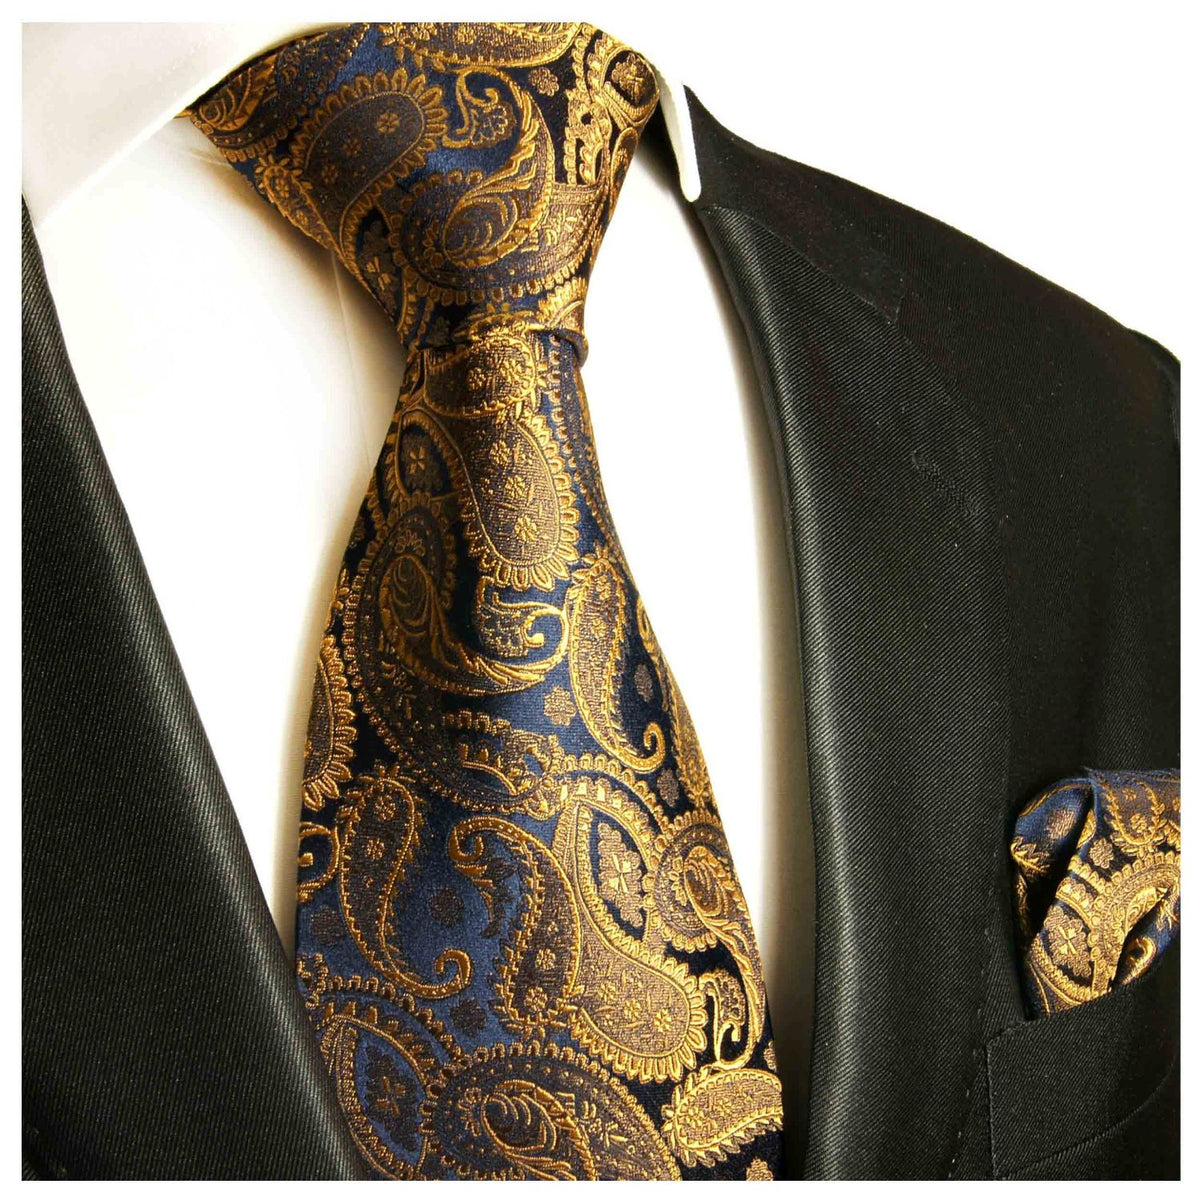 Bronze and Navy Silk Necktie Set by Paul Malone | Paul Malone